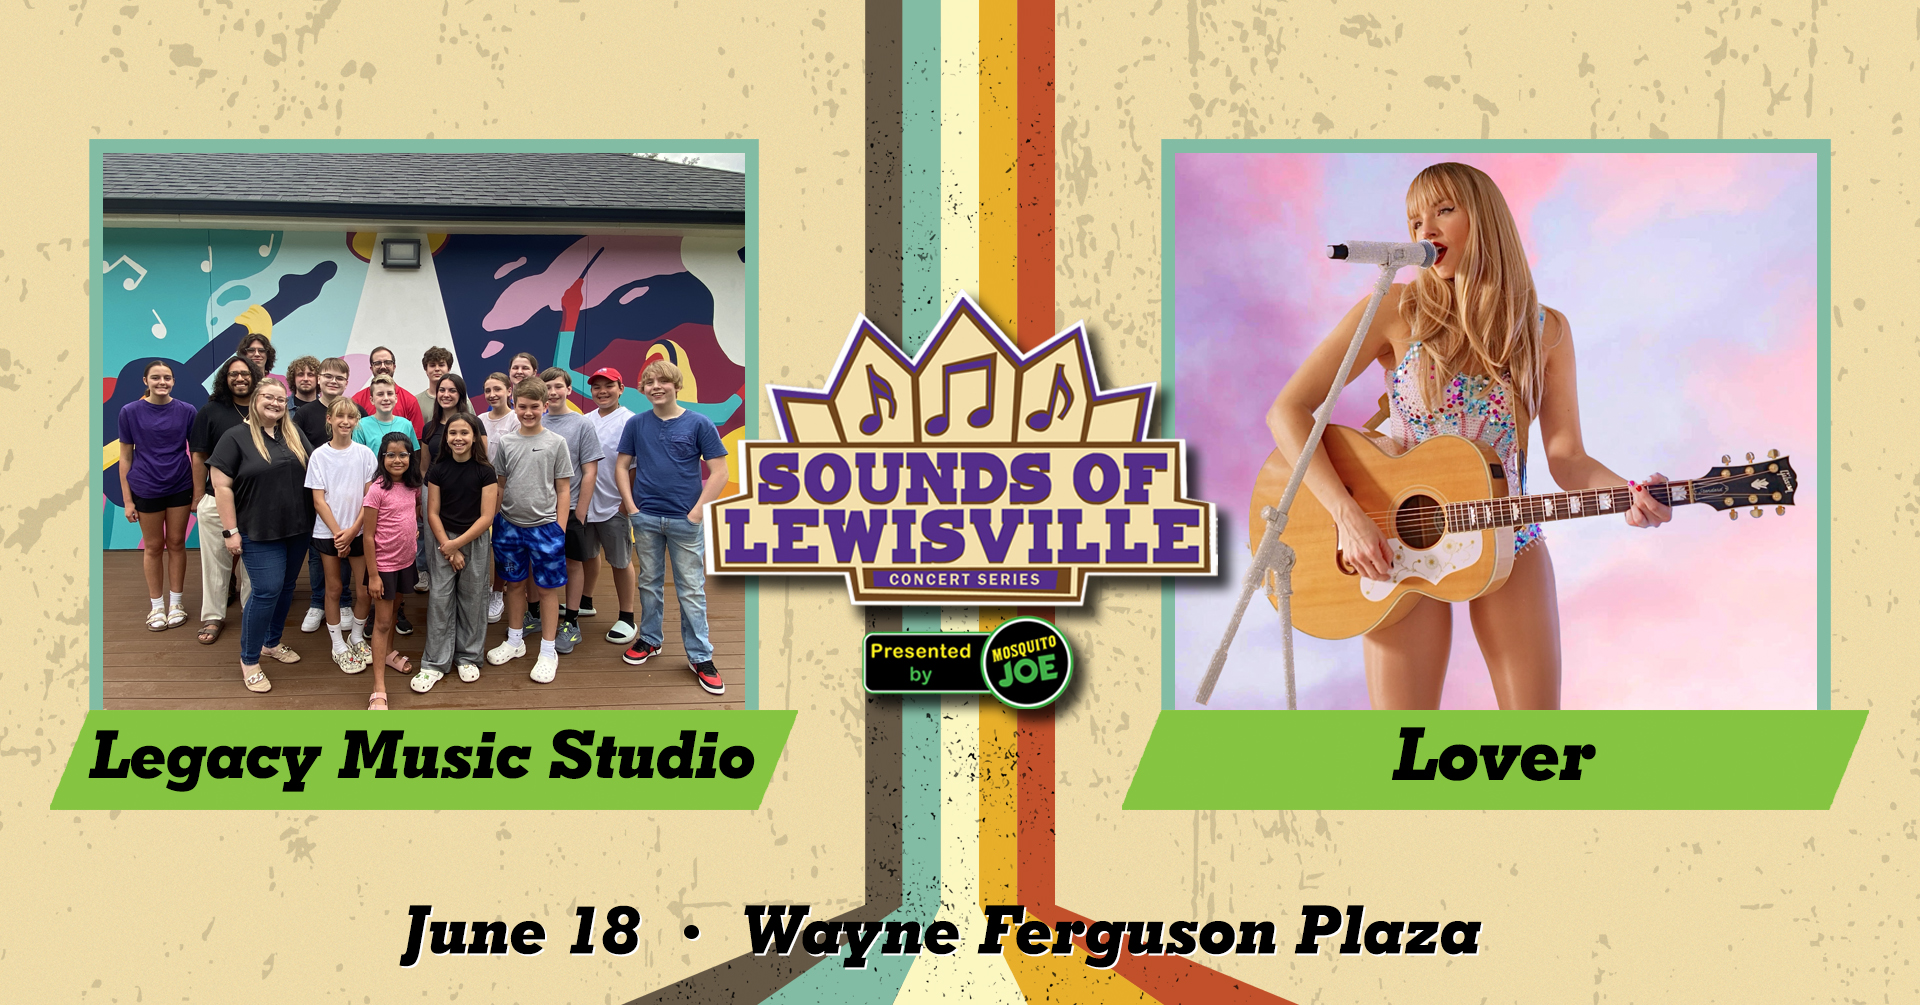 Sounds of Lewisville - June 18 concert